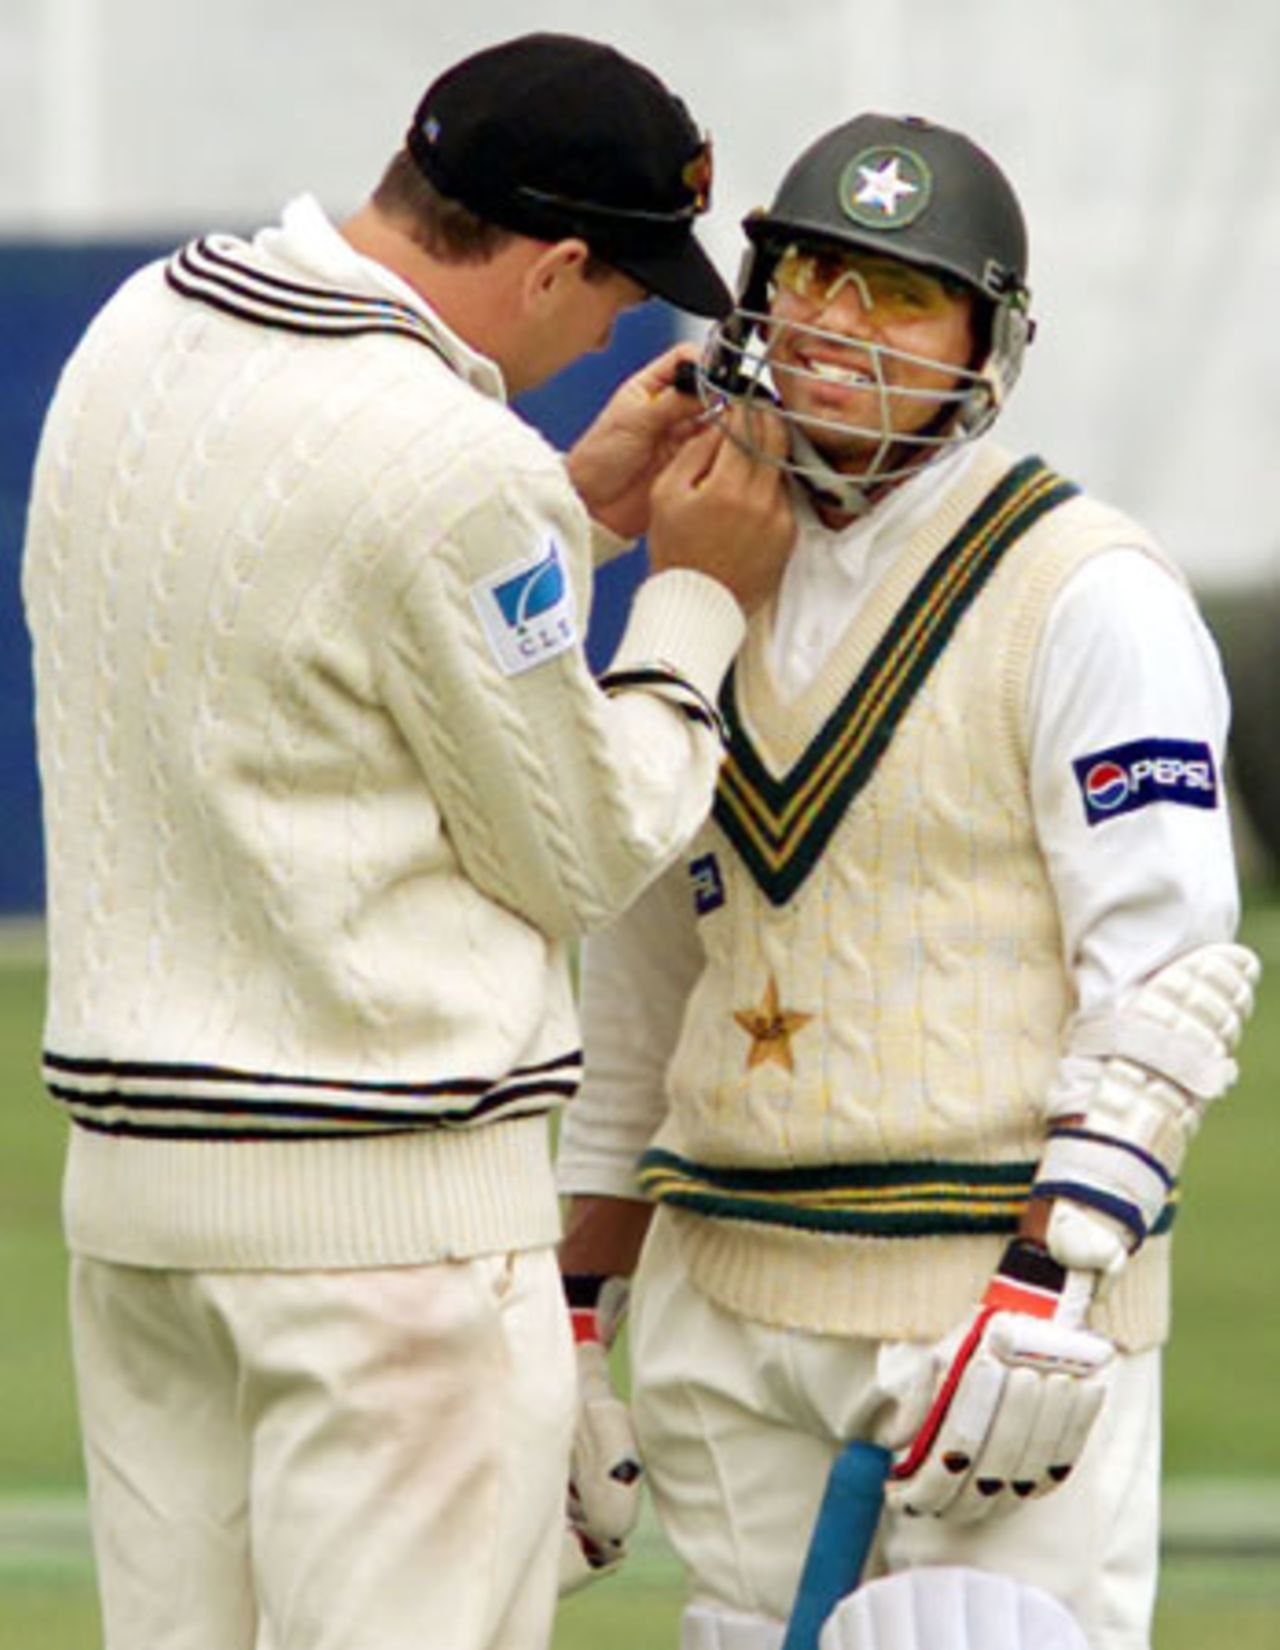 New Zealand fielder Stephen Fleming does up the chin strap of the helmet of Pakistan lower order batsman Saqlain Mushtaq. 2nd Test: New Zealand v Pakistan at Jade Stadium, Christchurch, 15-19 March 2001 (18 March 2001).